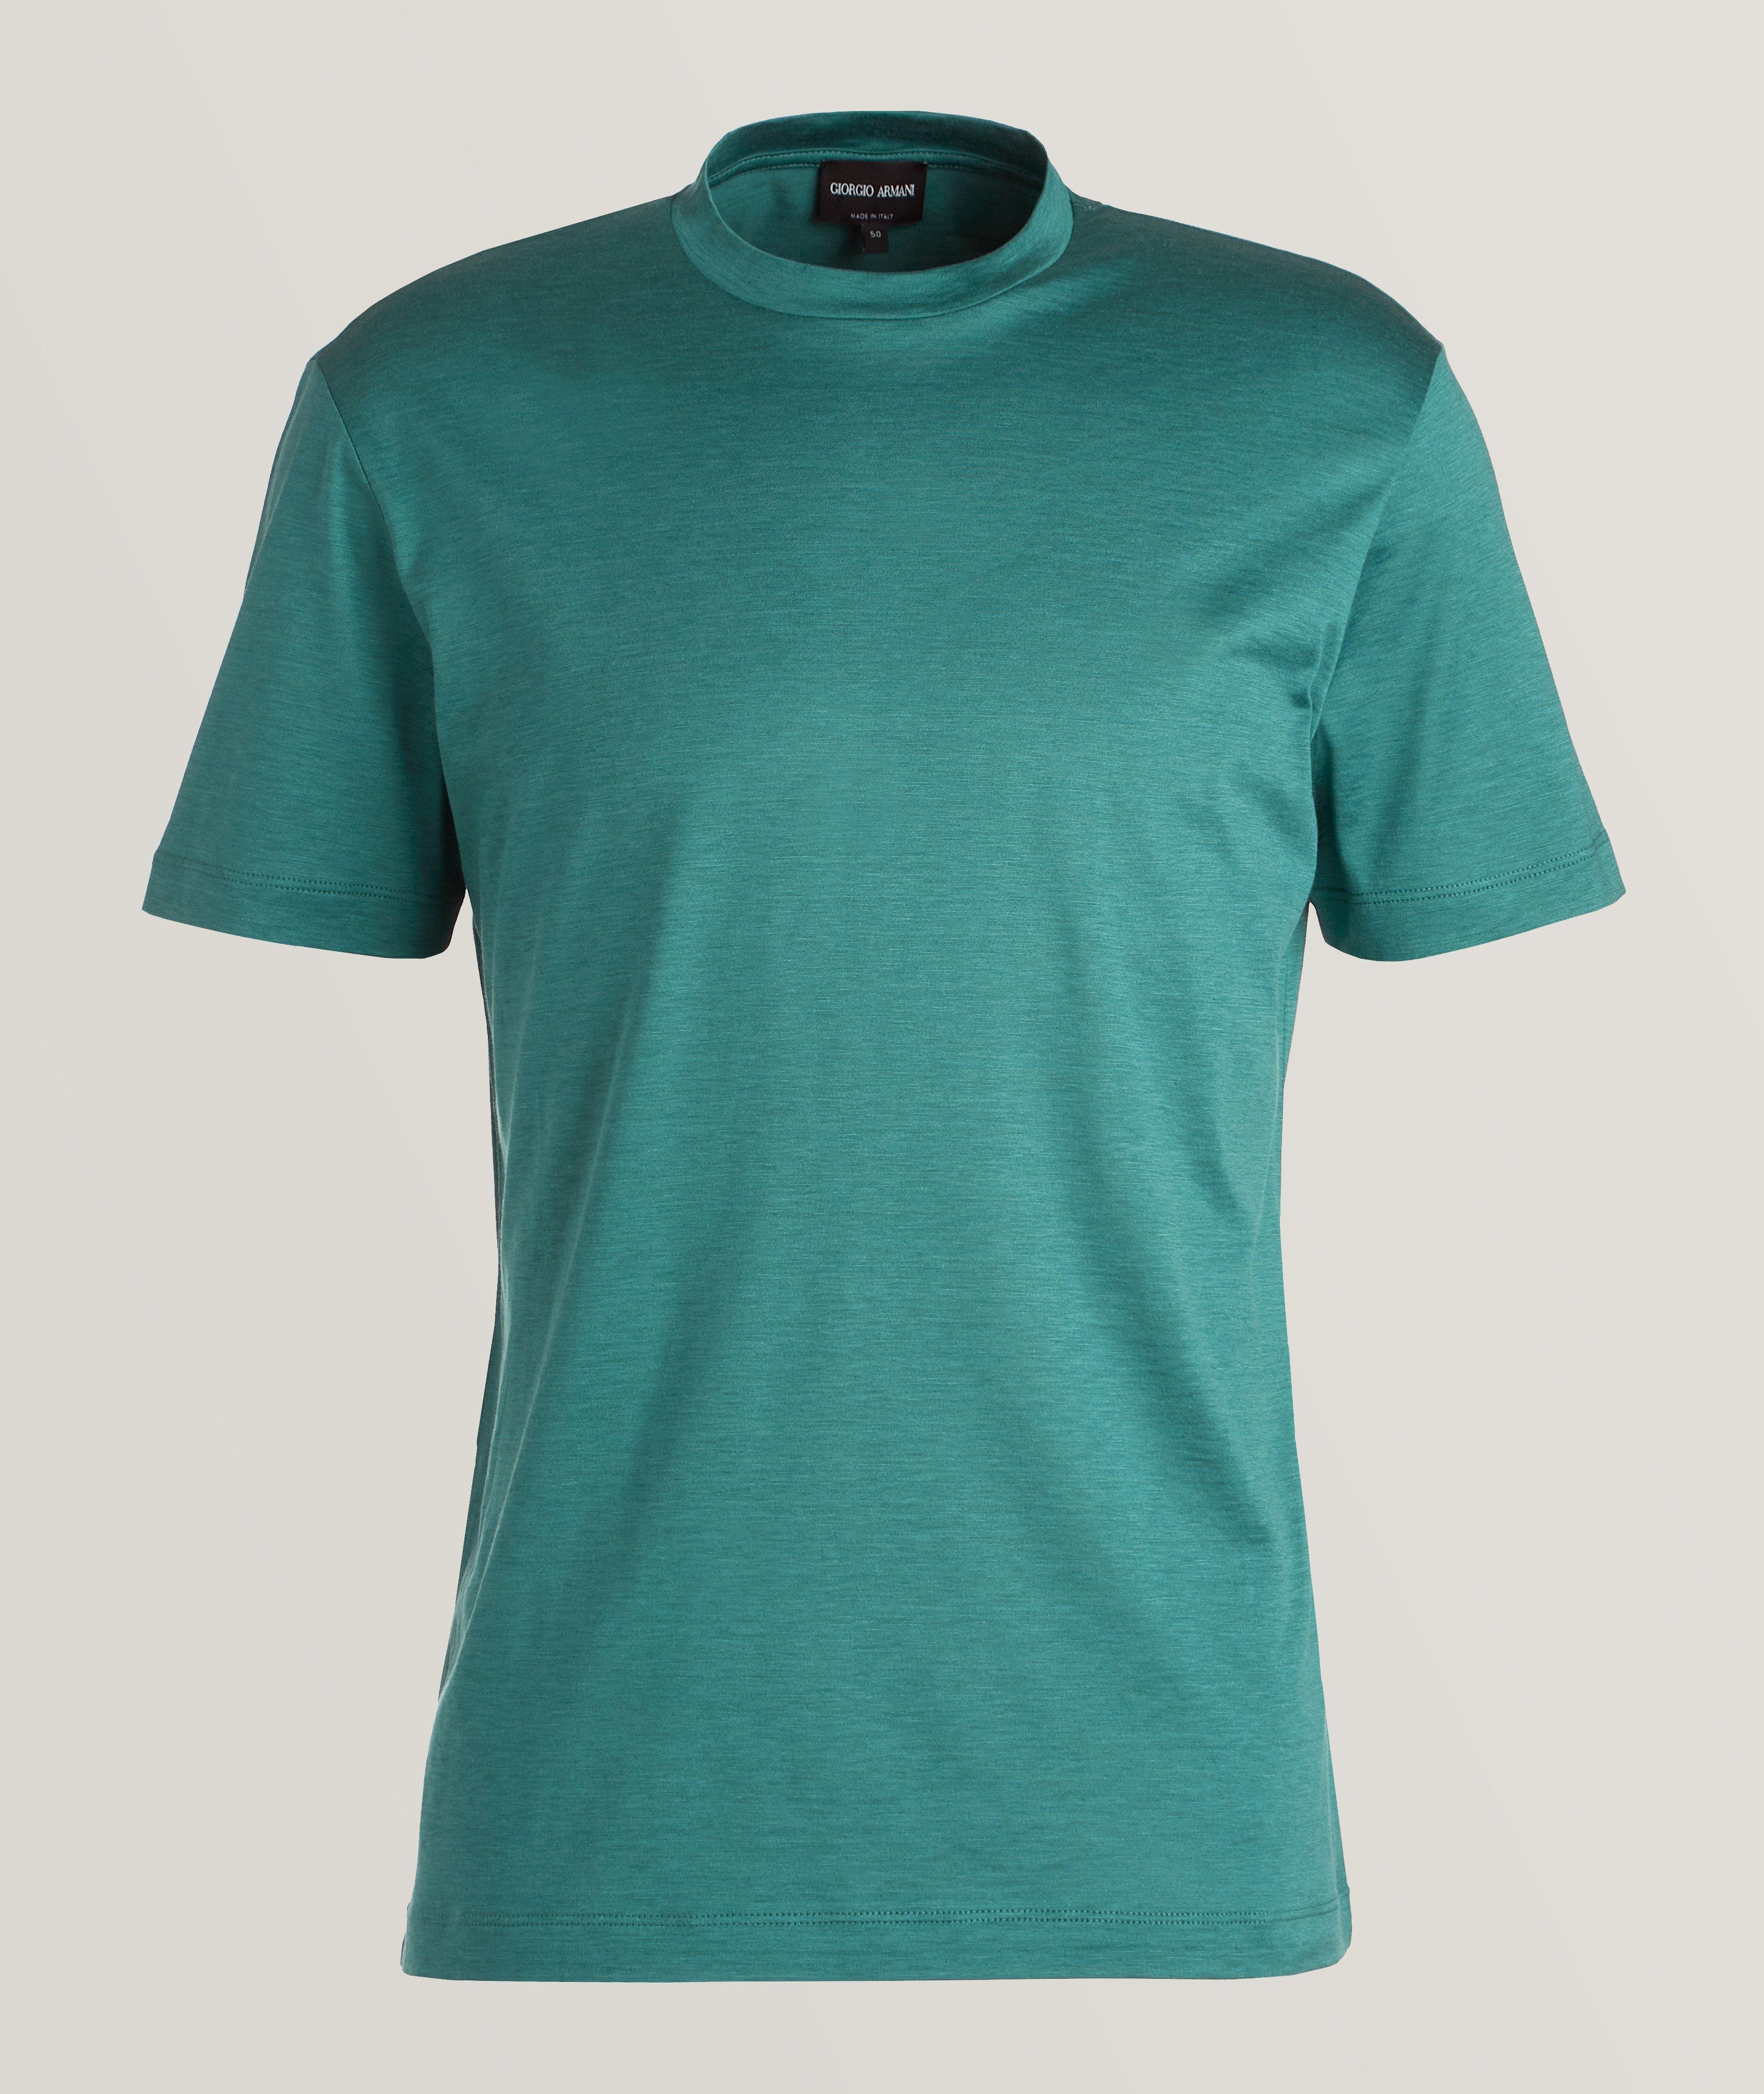 Heathered Silk-Cotton Jersey T-Shirt image 0